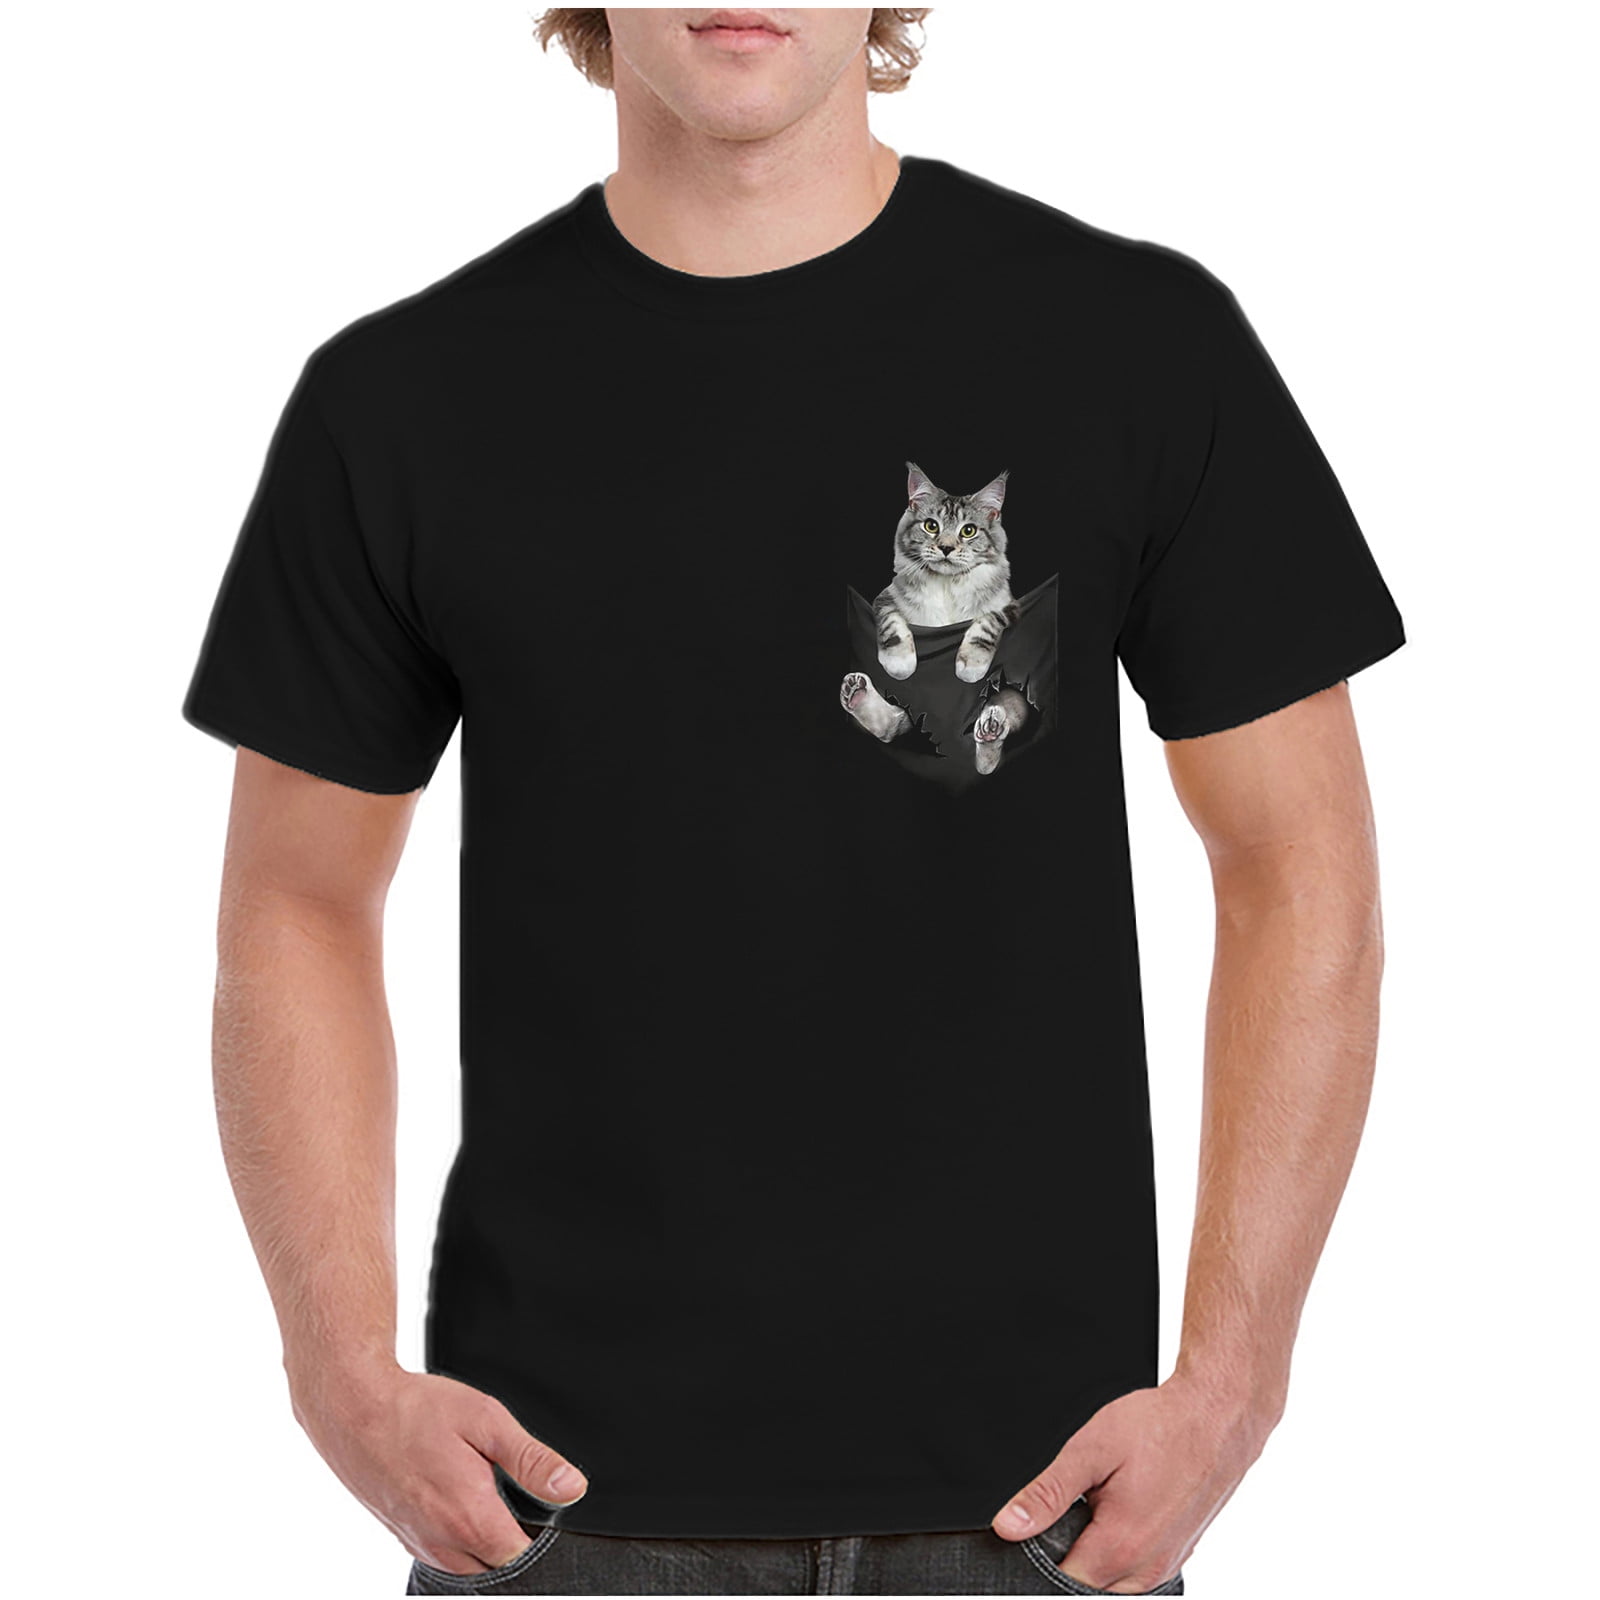 Kokovifyves Mens T Shirts Clearance under $10 Men's Pocket Cat Animal Print  Crew-Neck T-Shirt Casual Top 